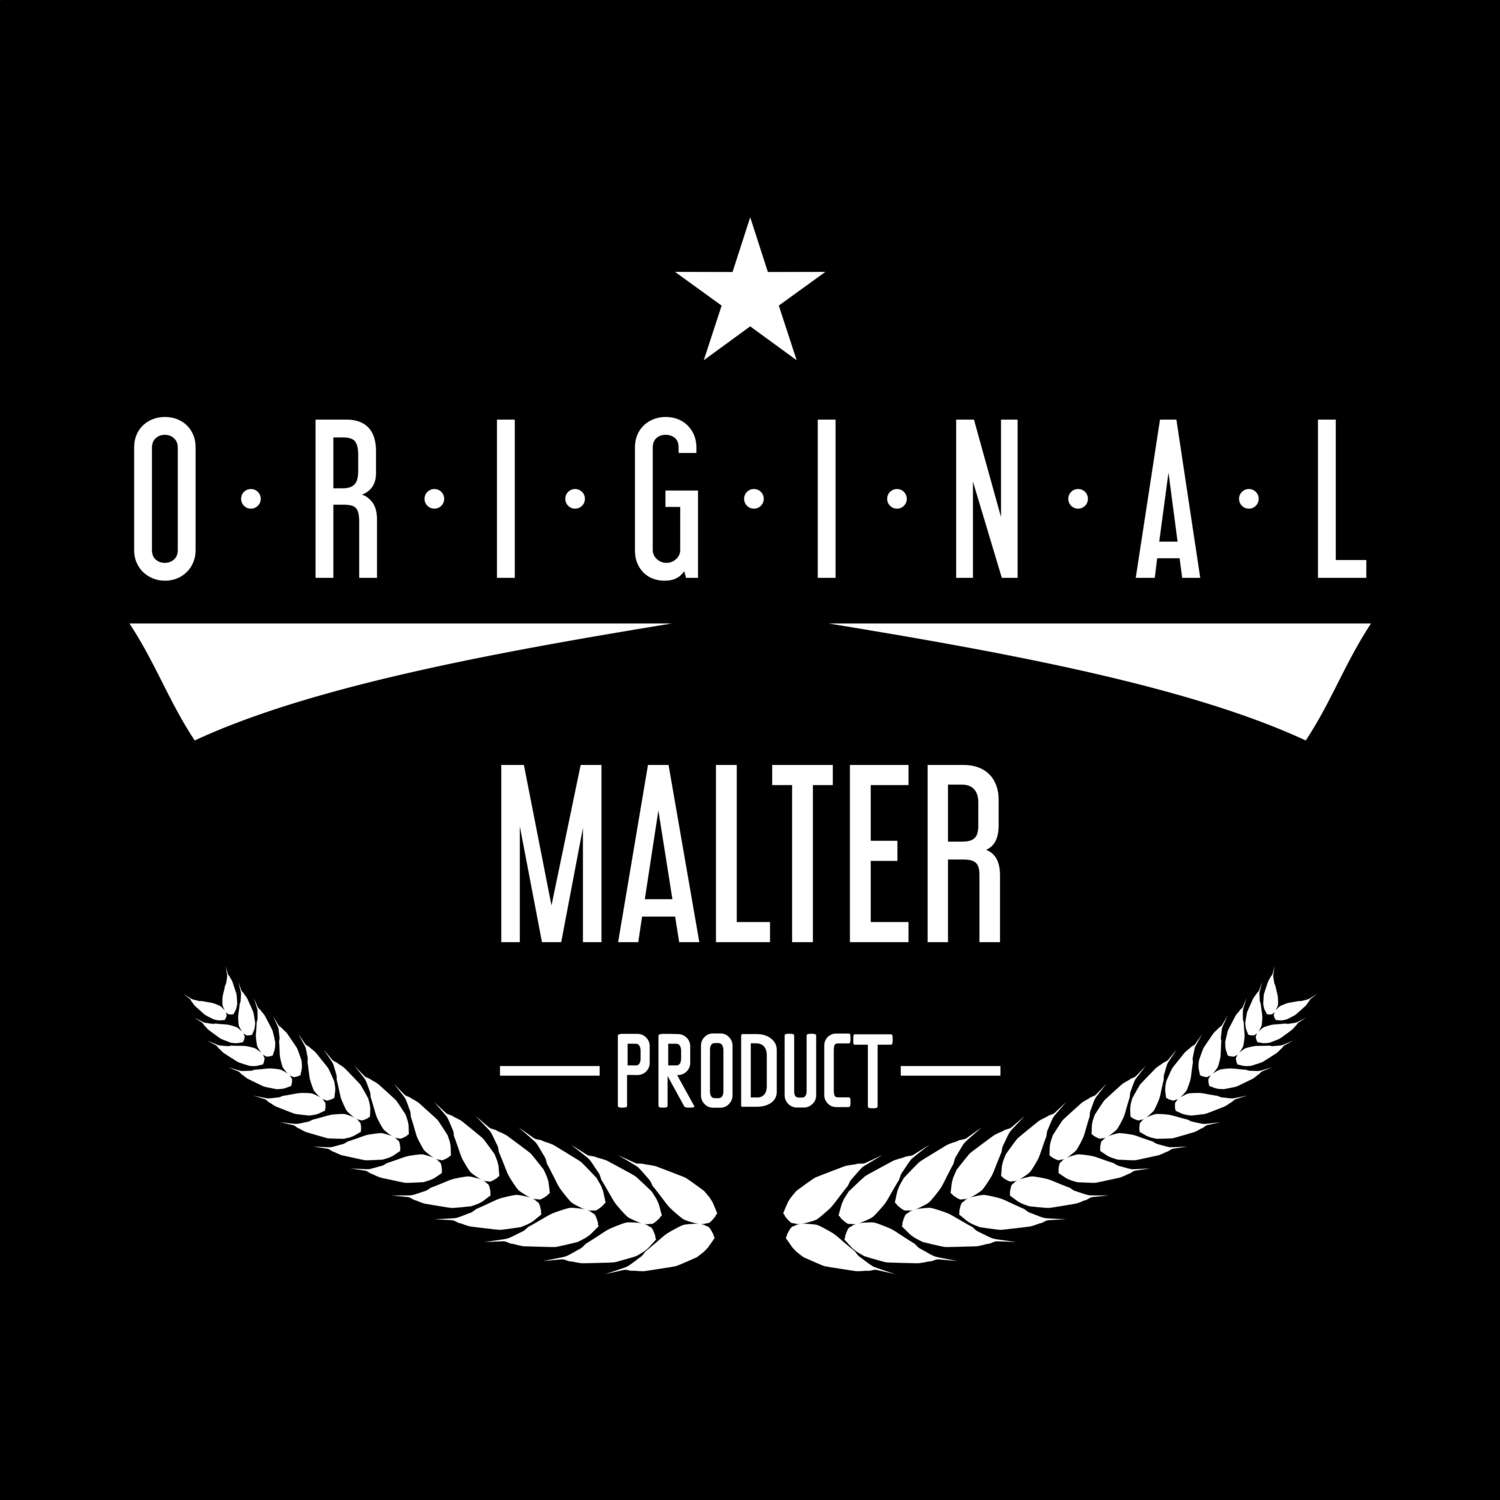 Malter T-Shirt »Original Product«